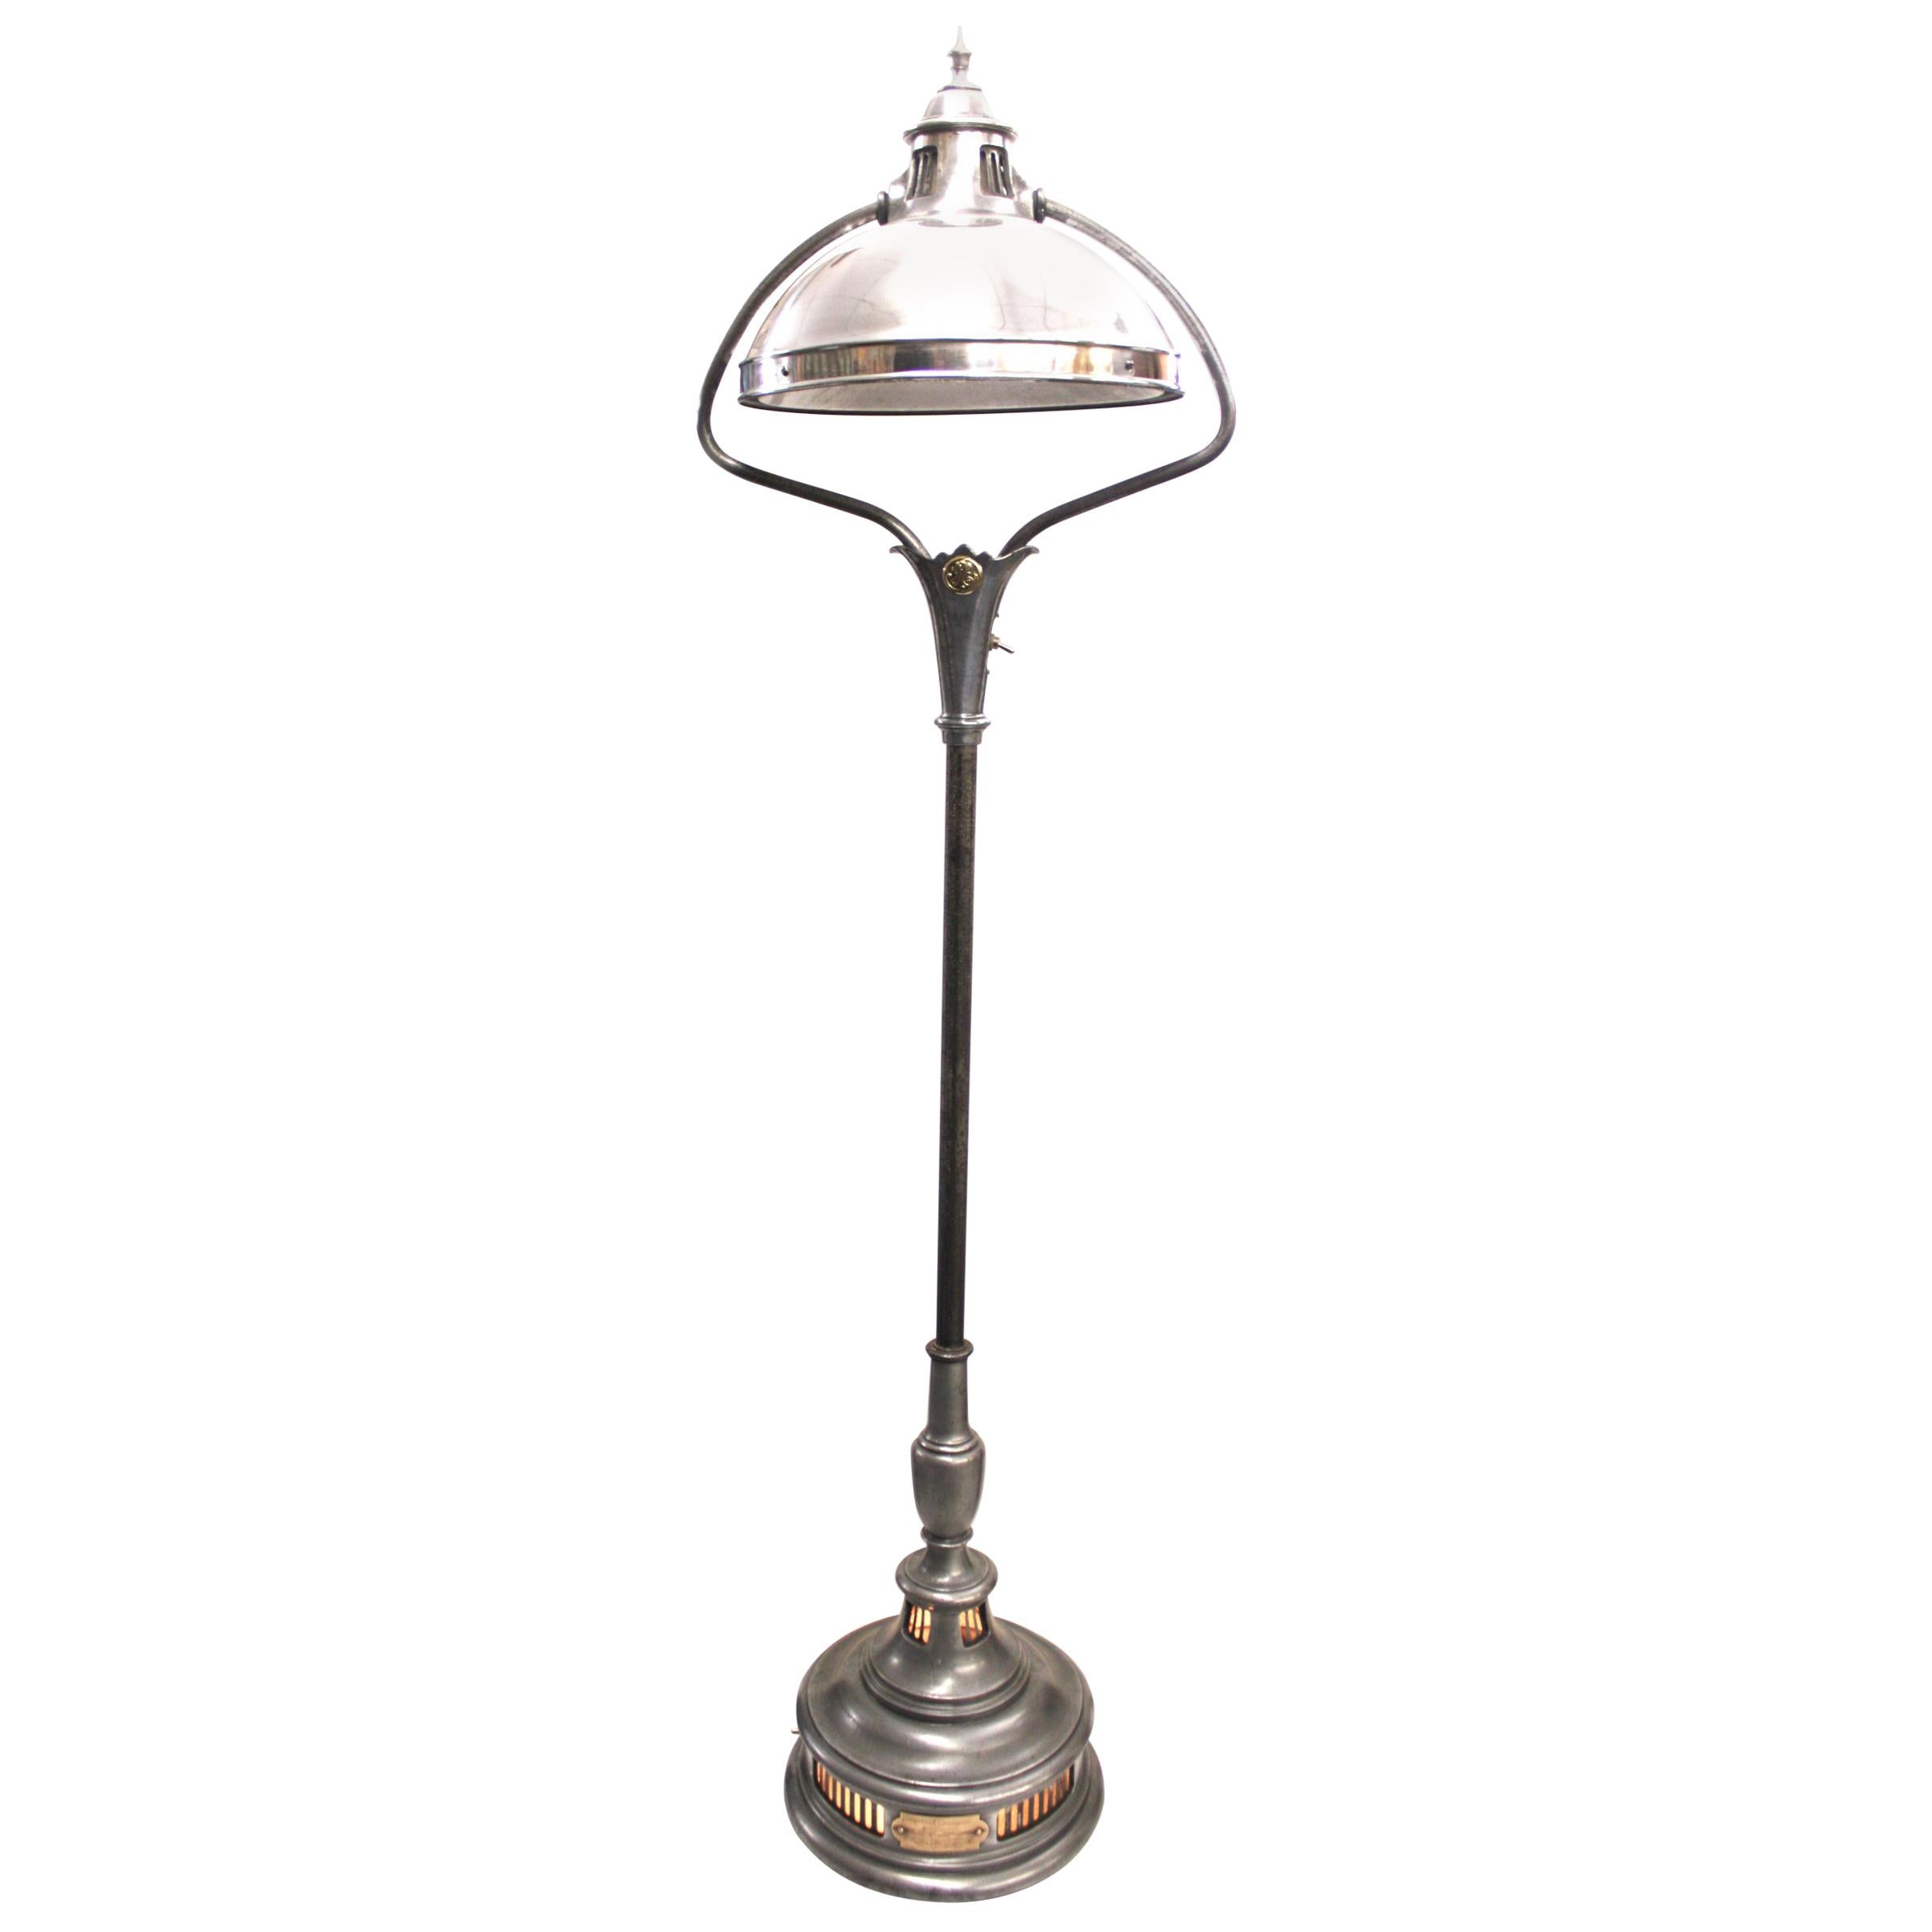 Vintage 1930s Industrial Aluminum GE Sunlamp Floor Lamp